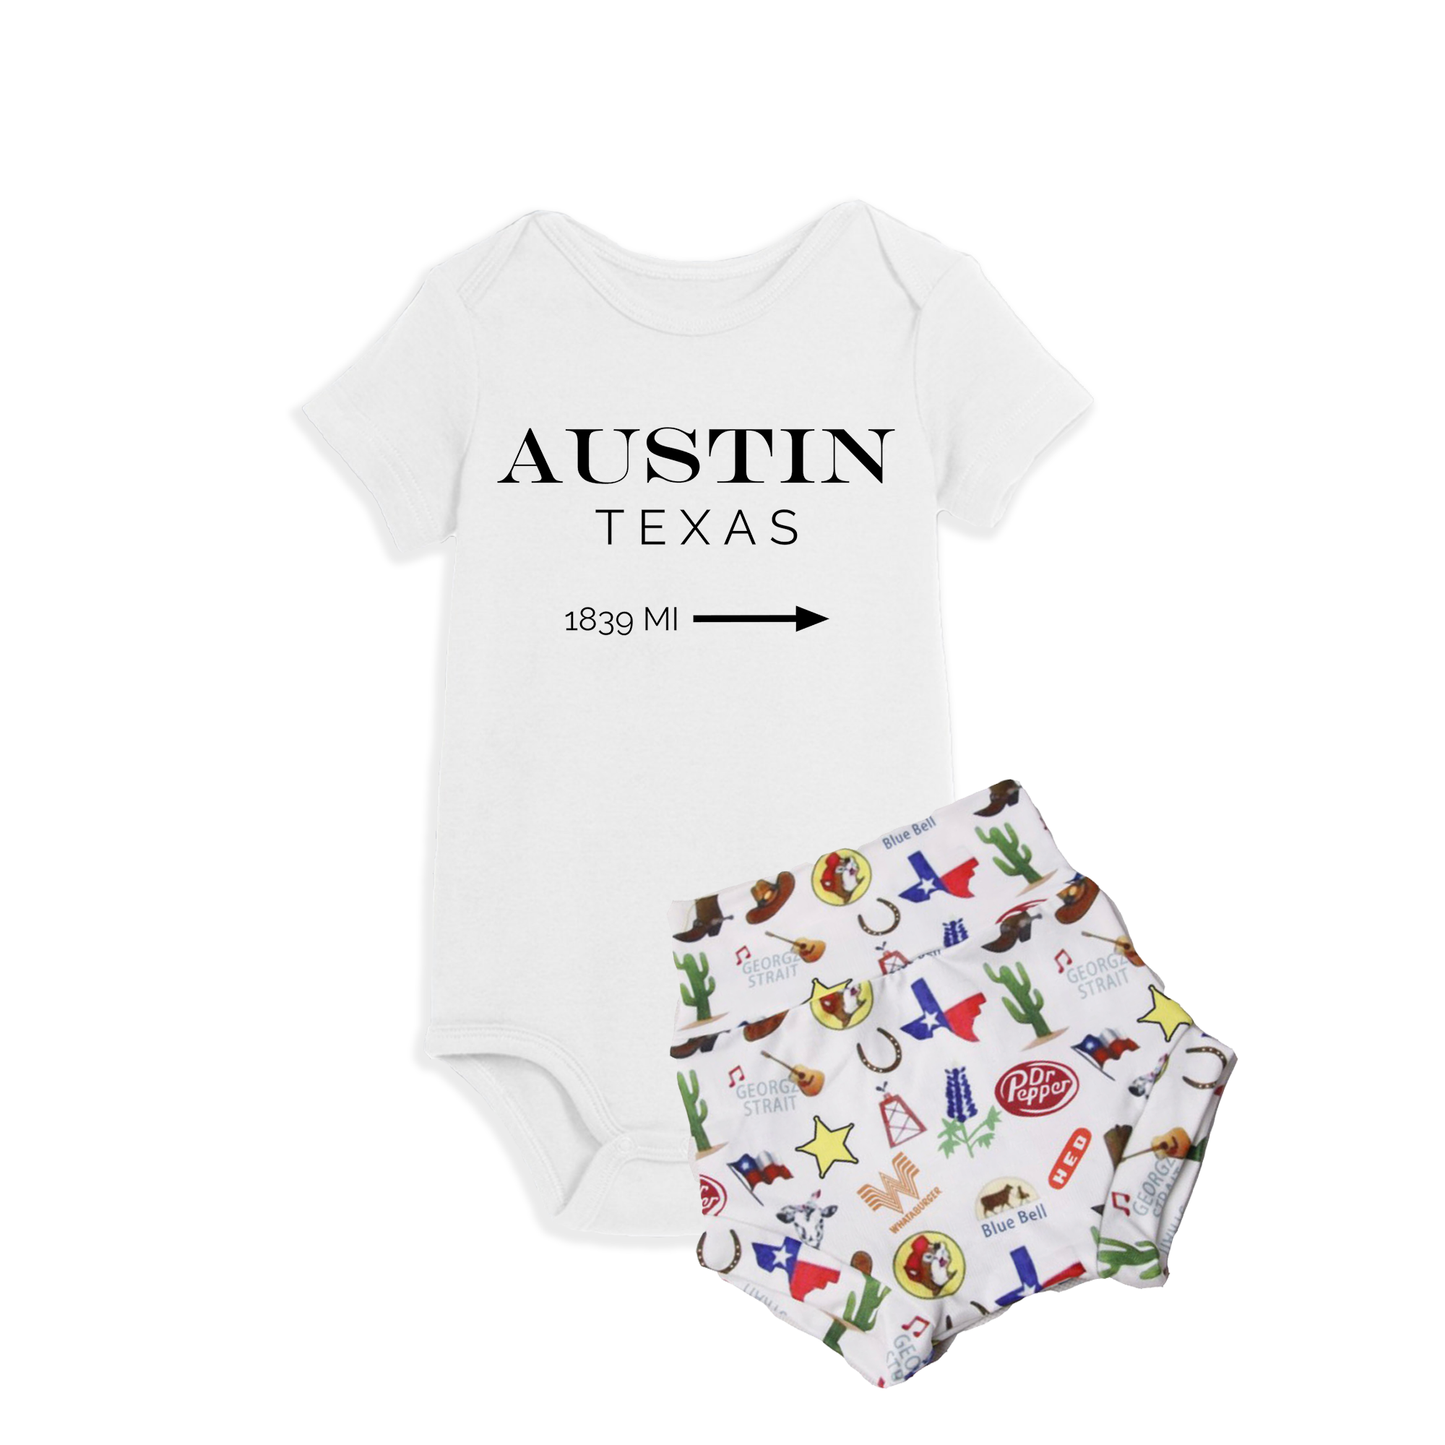 Austin Texas Bodysuit (Mile Marker)-Bodysuits-Baby Bae Boutique